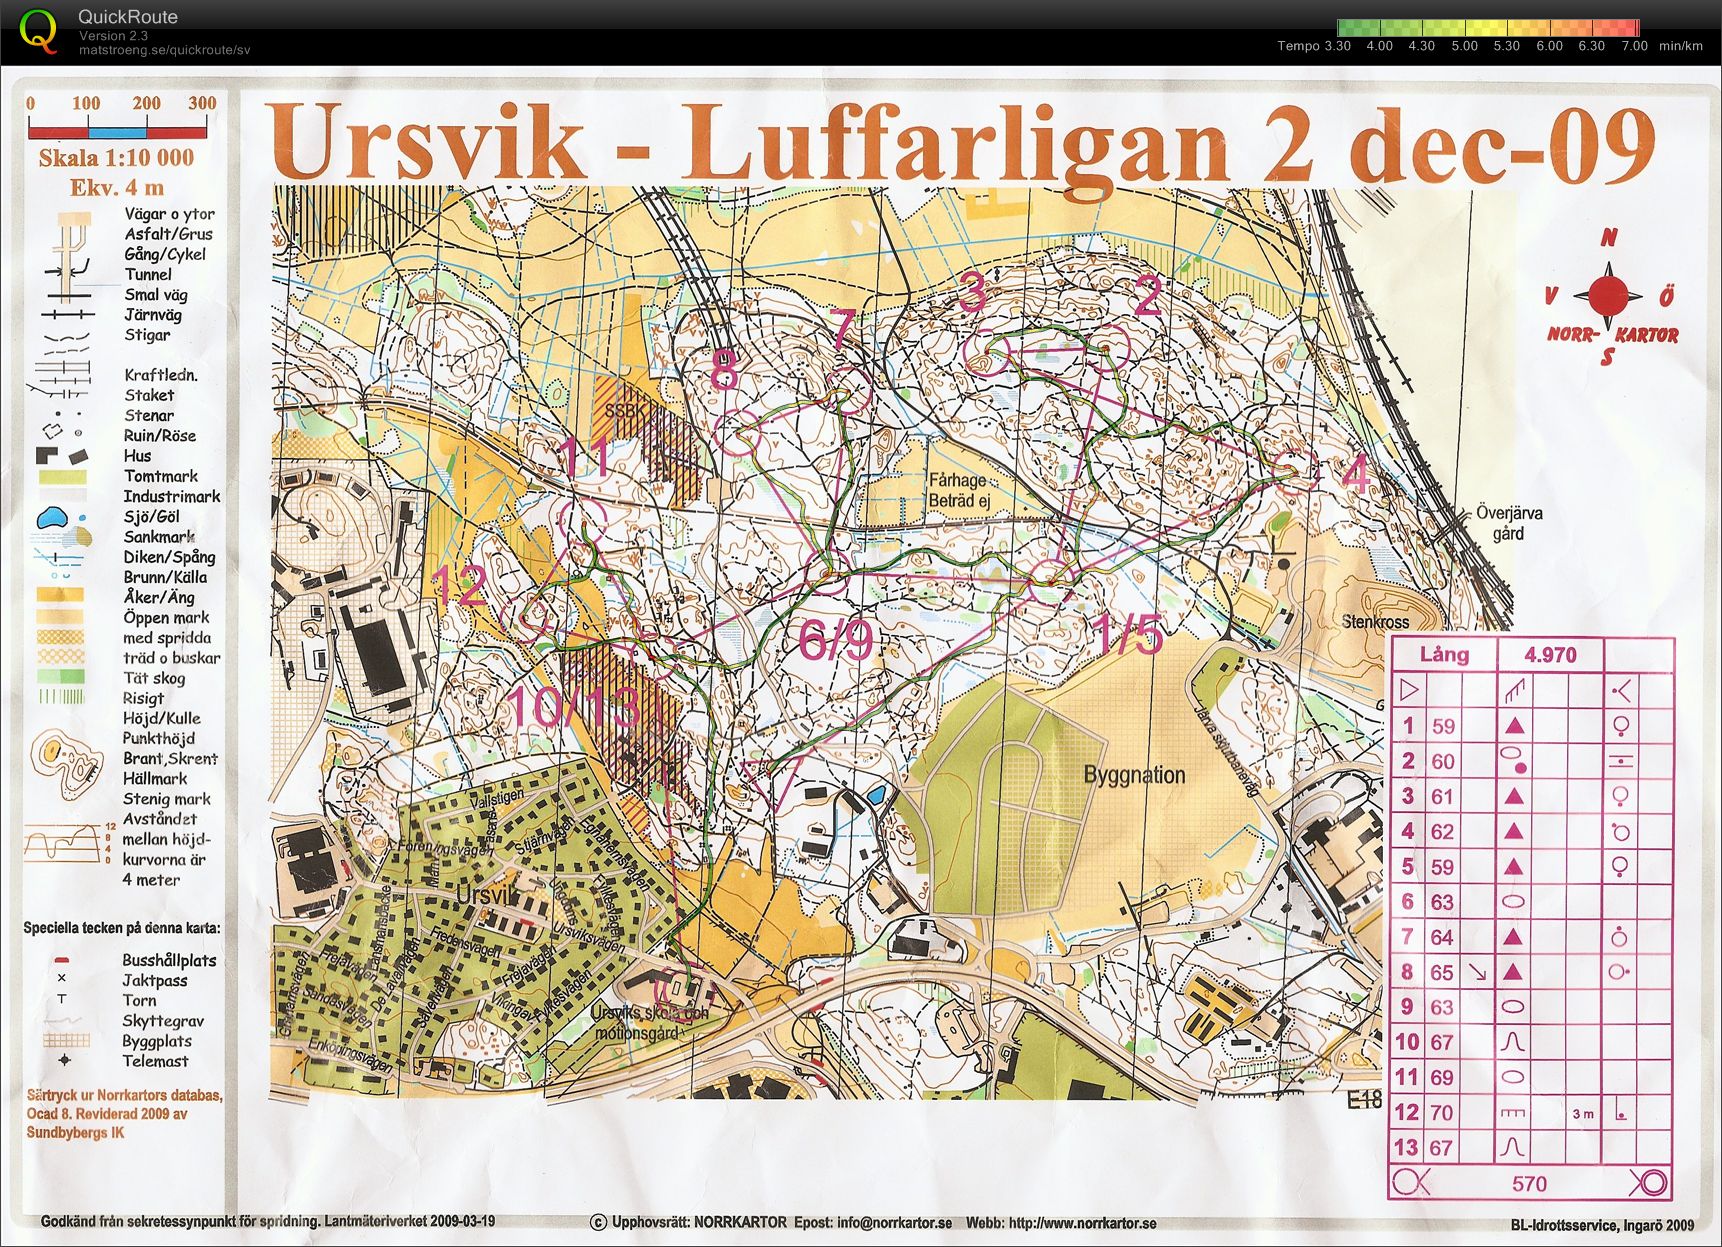 Luffarligan Ursvik (02/12/2009)